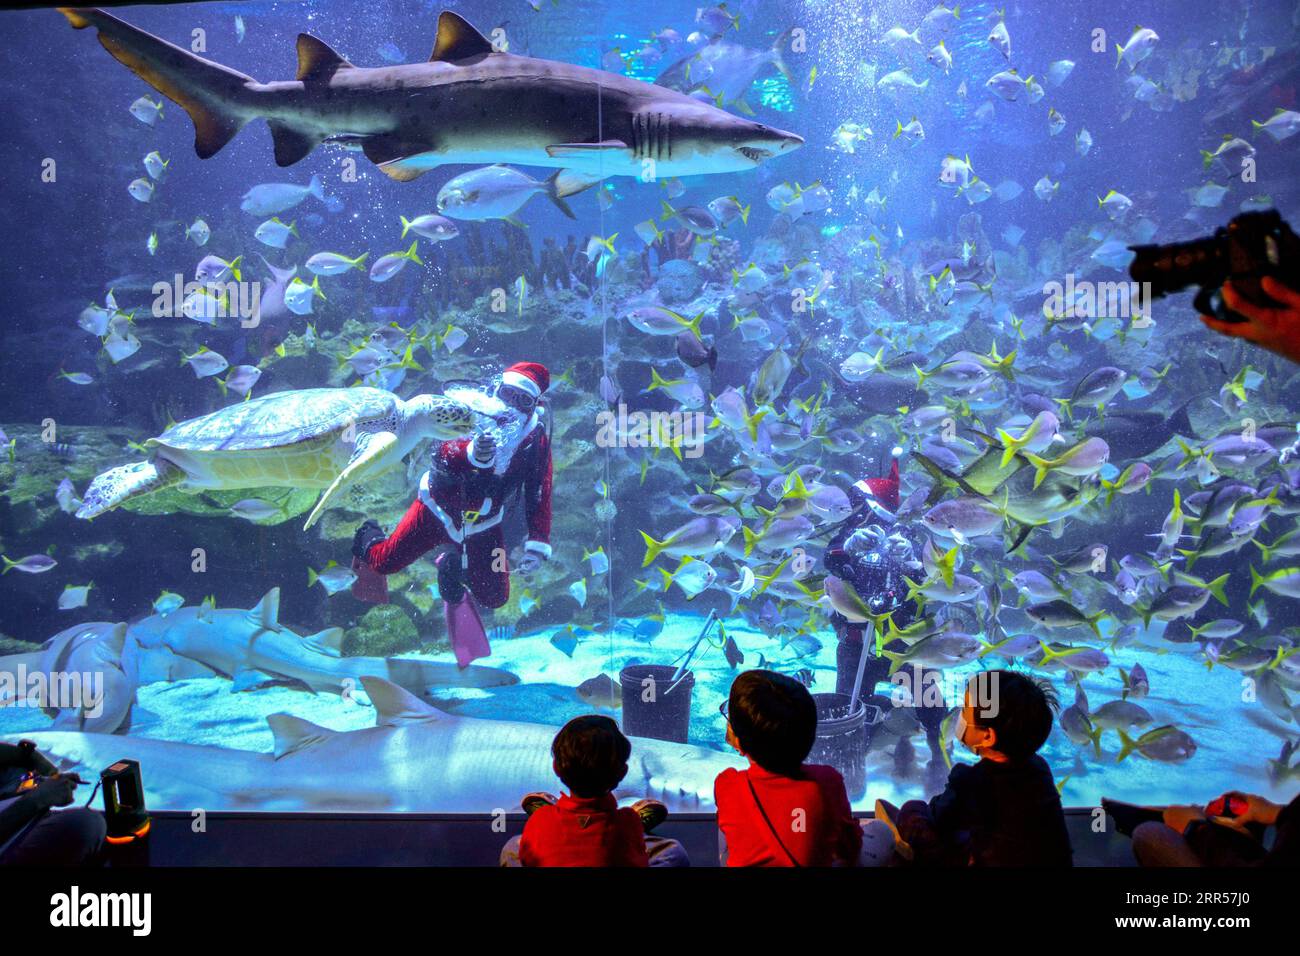 201225 -- BEIJING, Dec. 25, 2020 -- A scuba diver dressed as Santa Claus feeds a turtle during a performance at Aquaria KLCC aquarium in Kuala Lumpur, Malaysia, Dec. 23, 2020. Photo by /Xinhua XINHUA PHOTOS OF THE DAY ChongxVoonxChung PUBLICATIONxNOTxINxCHN Stock Photo